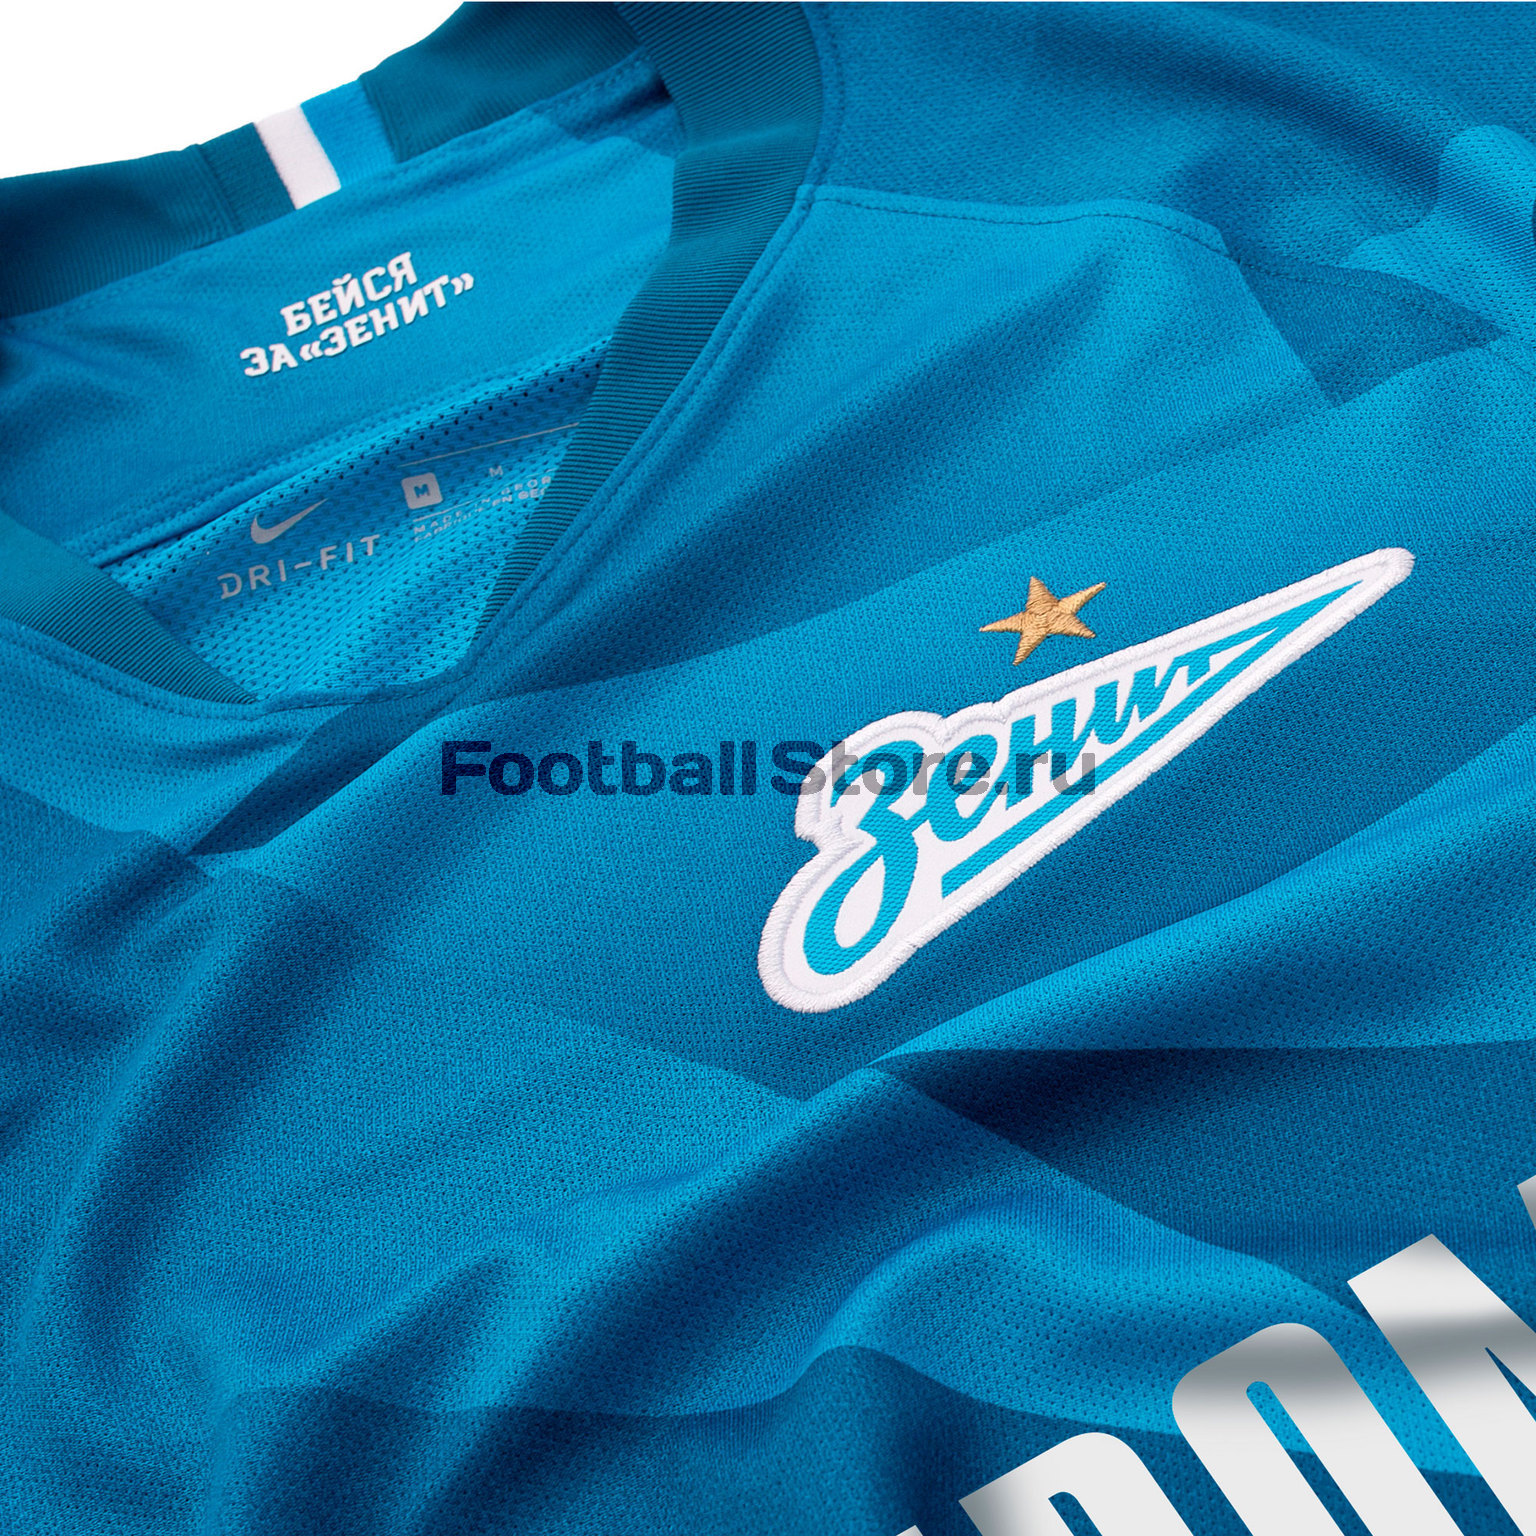 Оригинальная домашняя футболка Nike Zenit сезон 2019/20